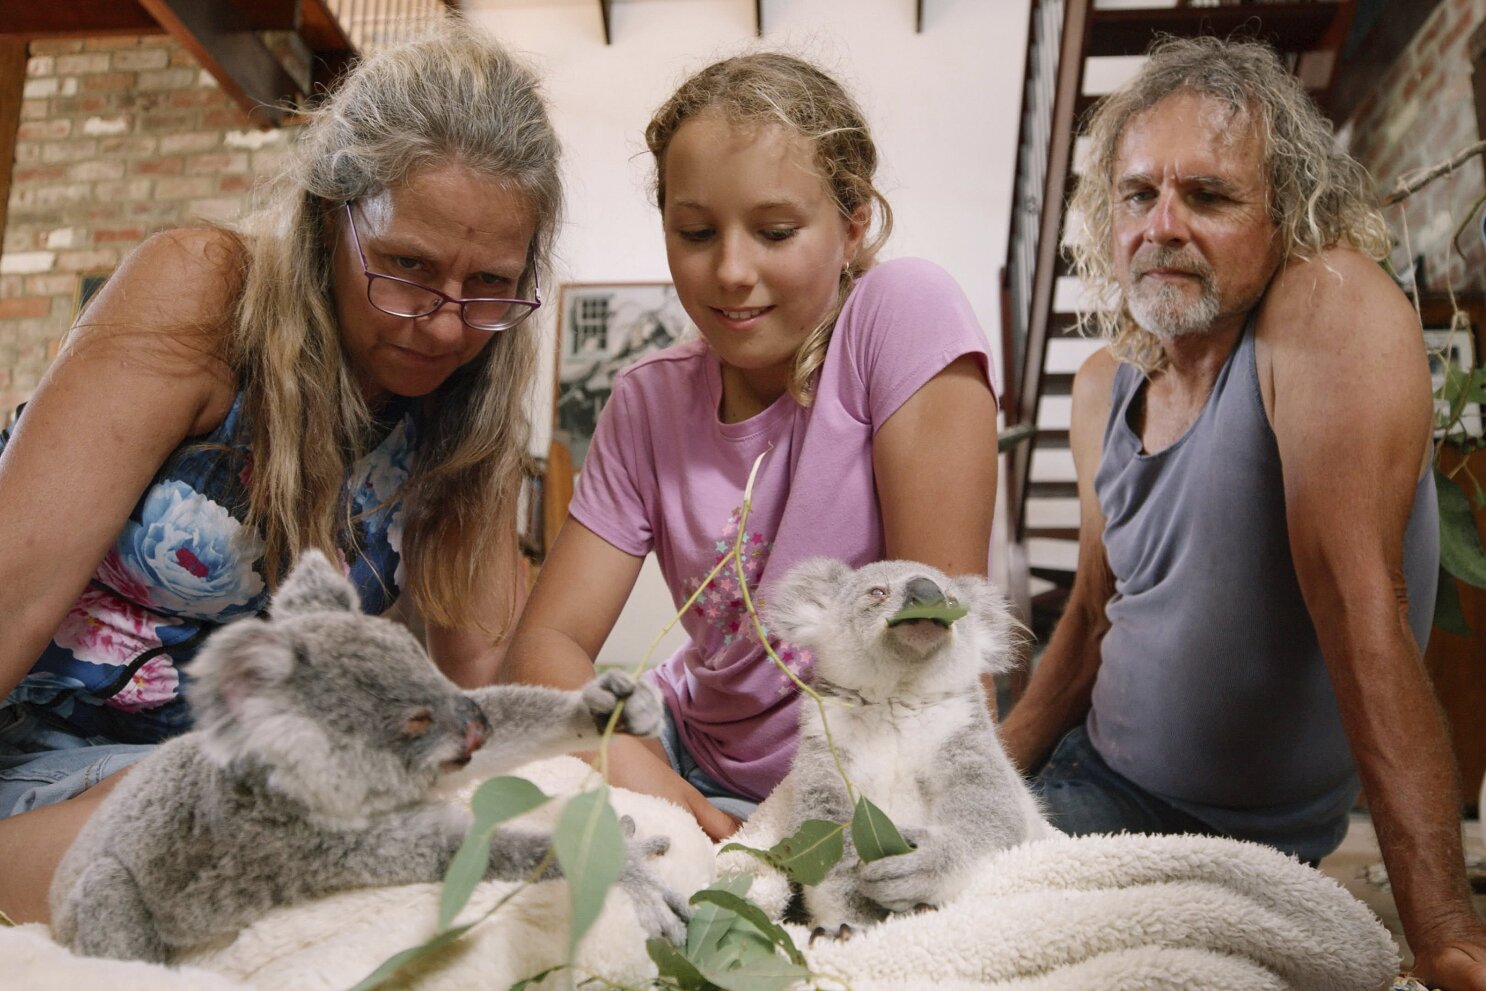 New Netflix series features an 11-year-old 'koala whisperer